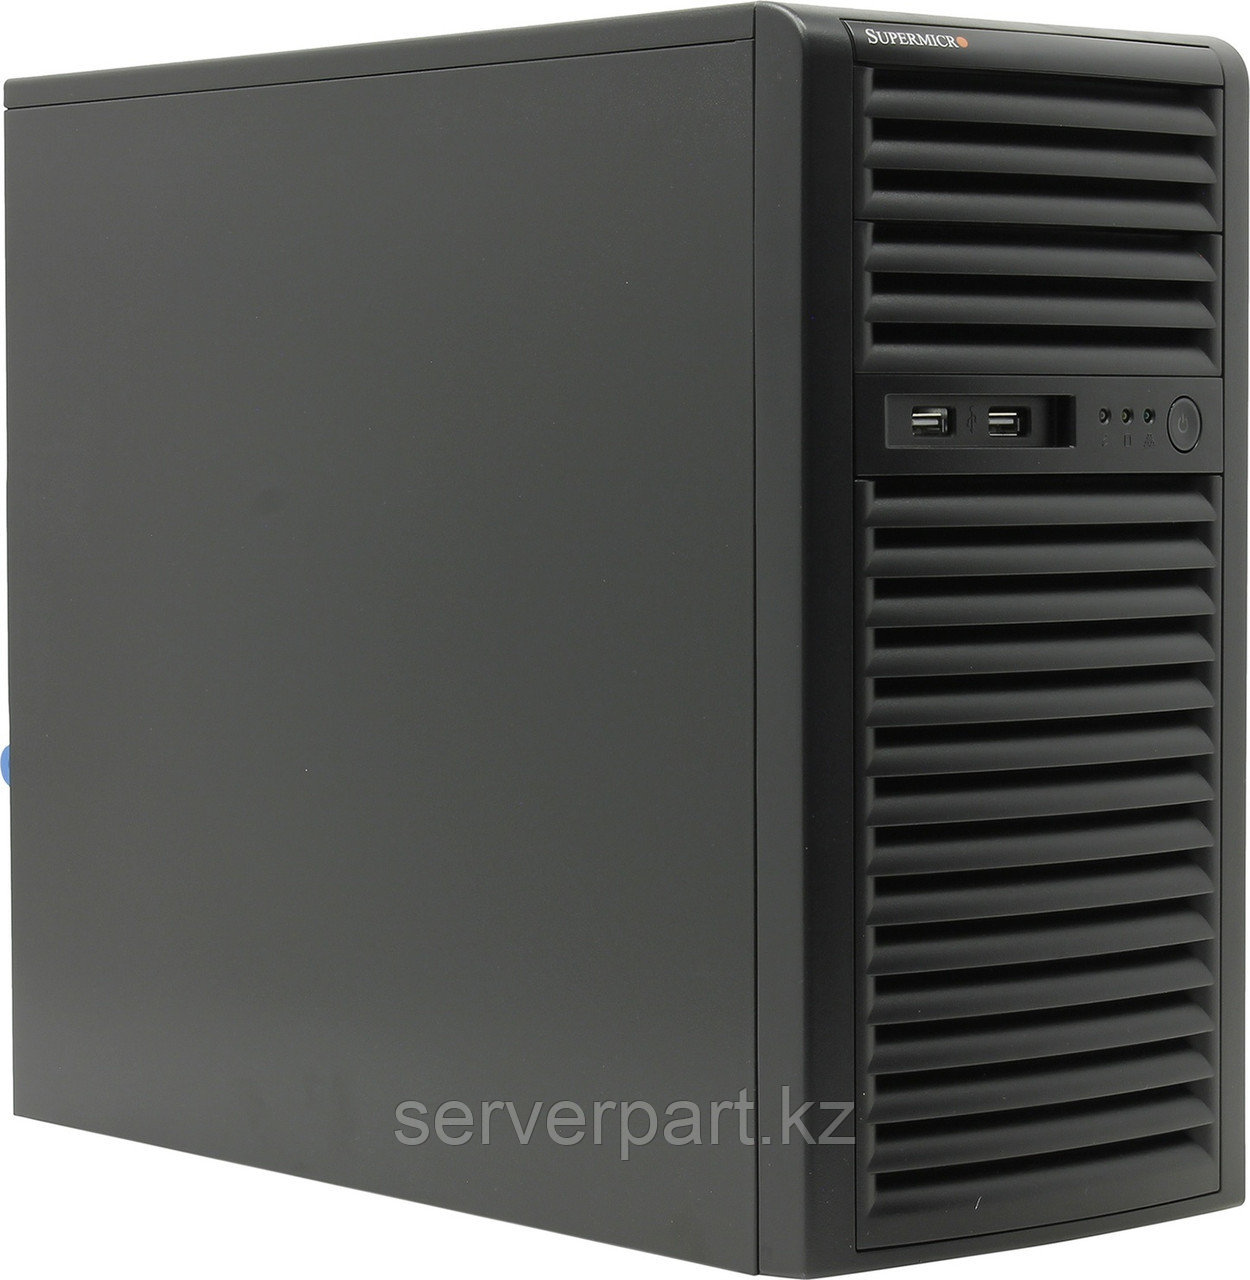 Сервер Supermicro SYS-5039C Tower 4LFF/4-core intel xeon E2124 3.3GHz/64GB EUDIMM/1x480GB SSD RI Hyb